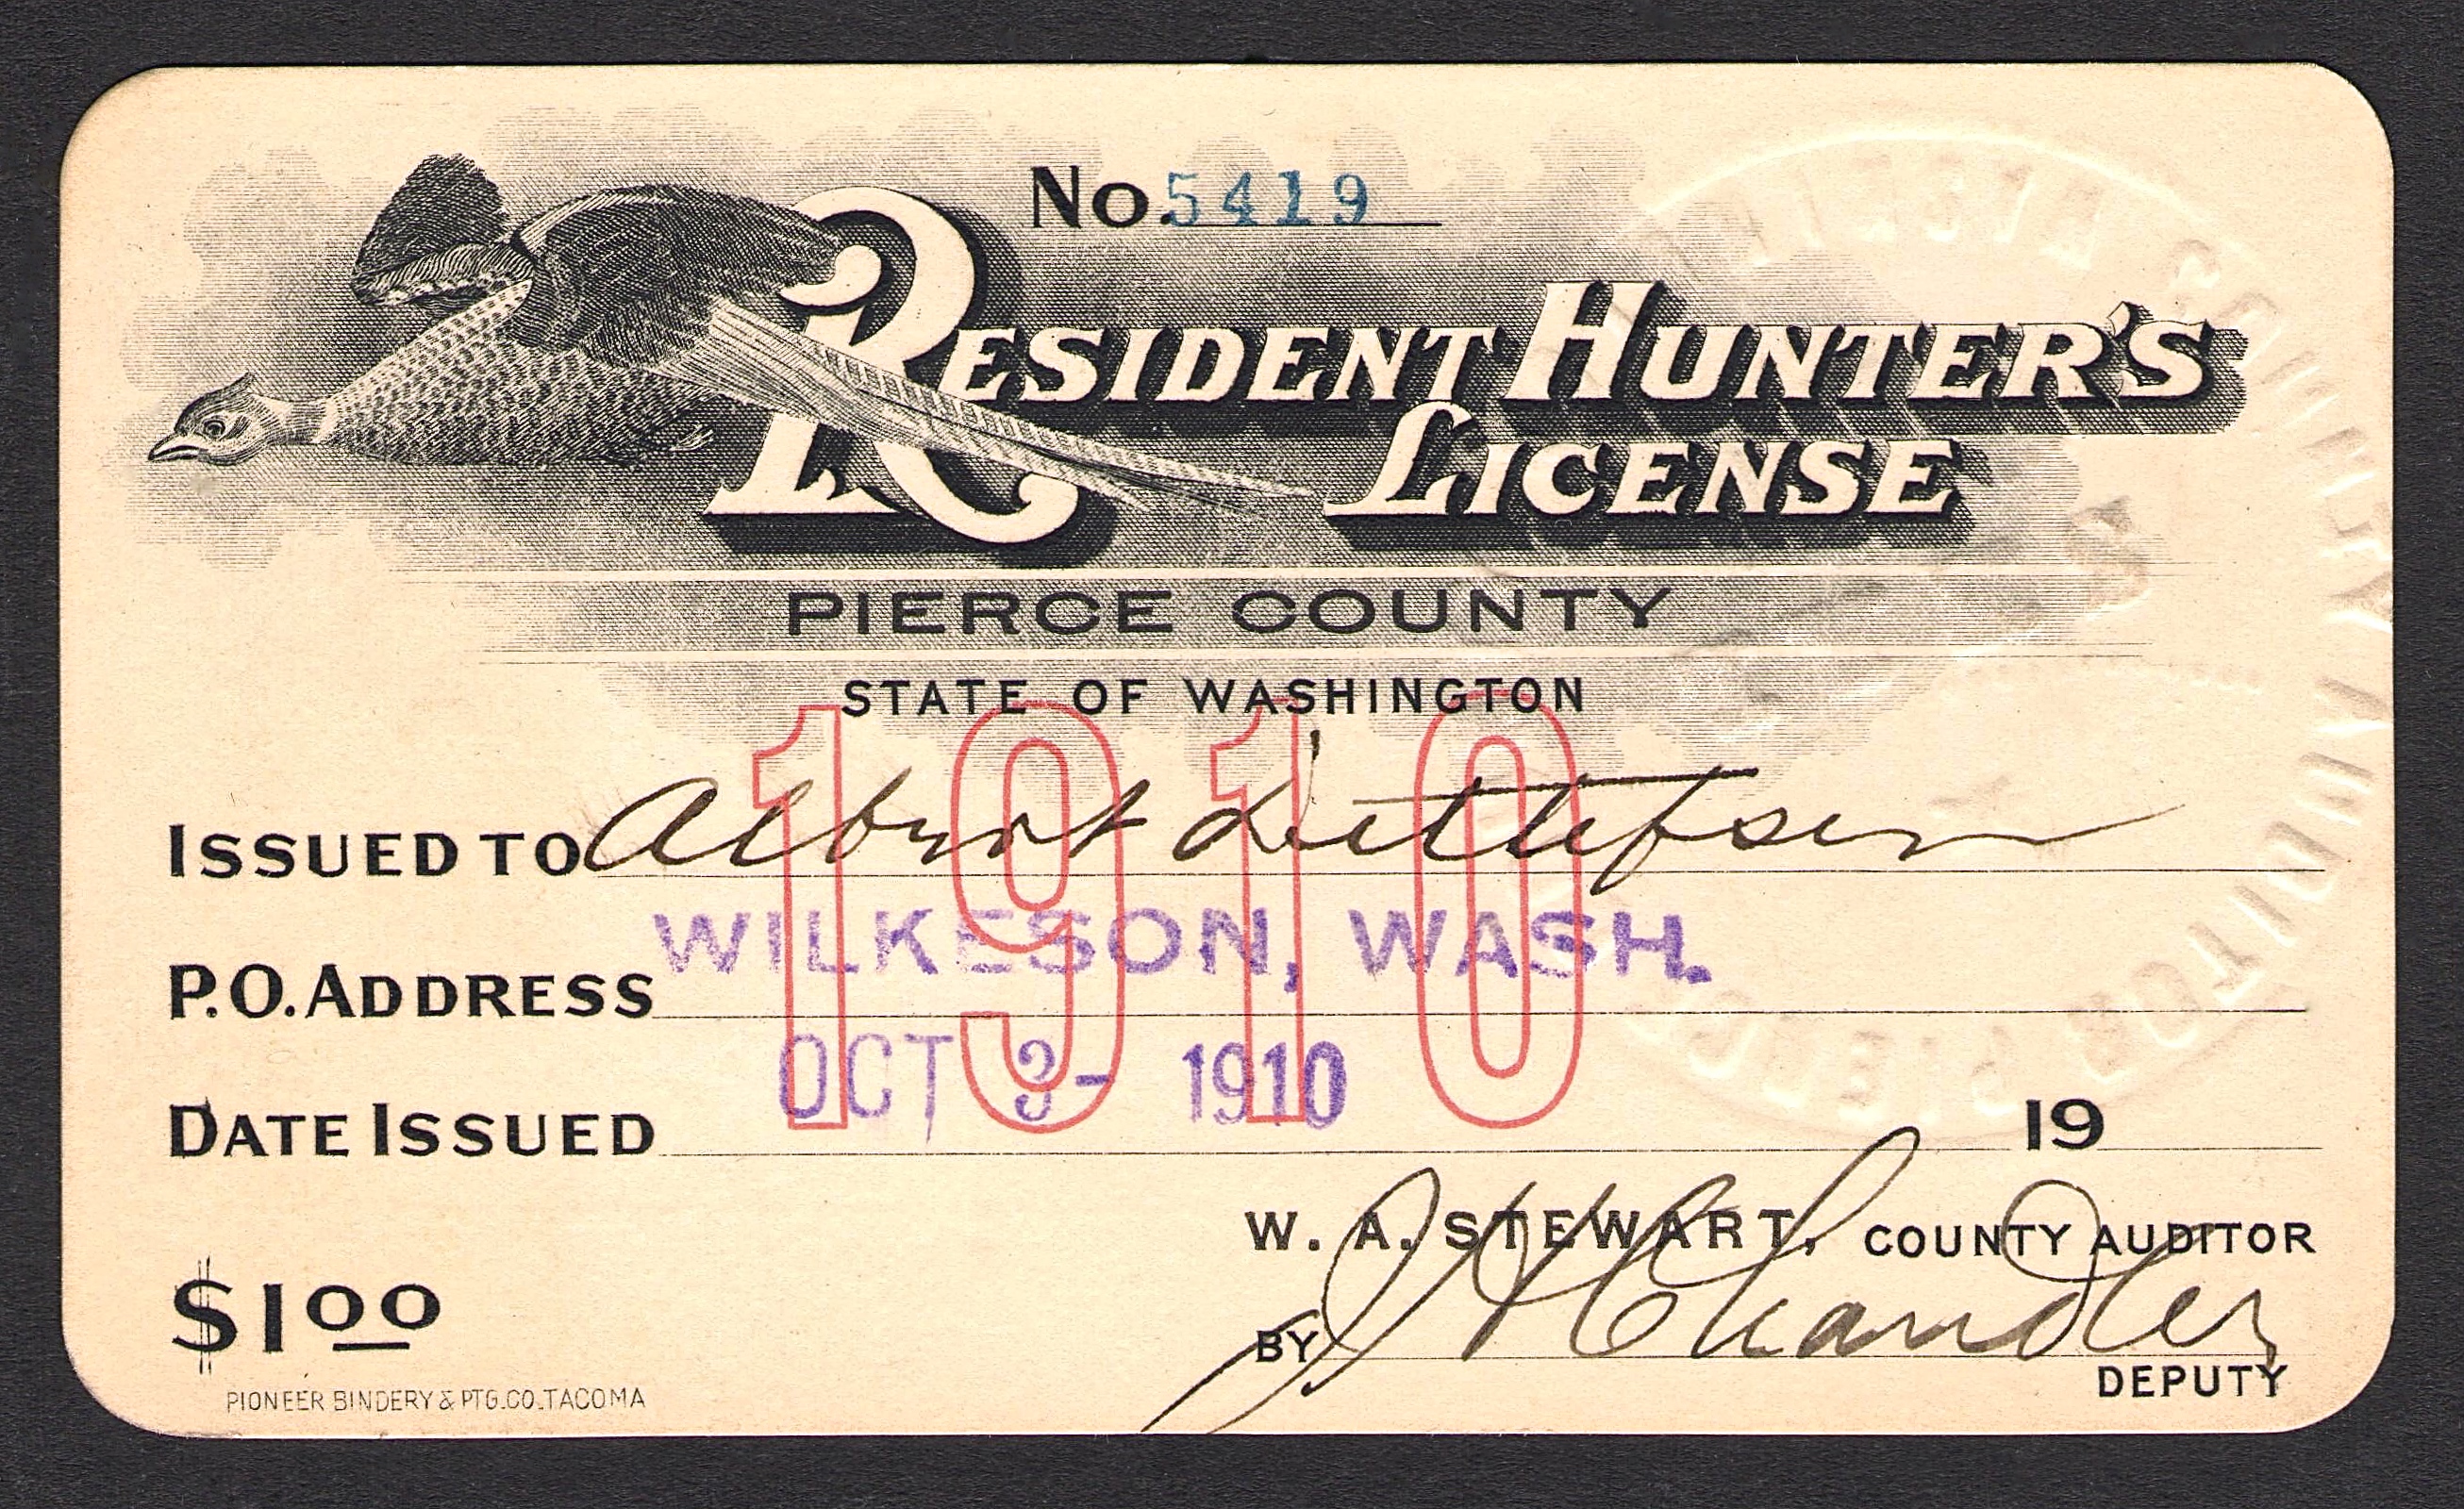 1910 Pierce County, Washington Resident Hunter's License